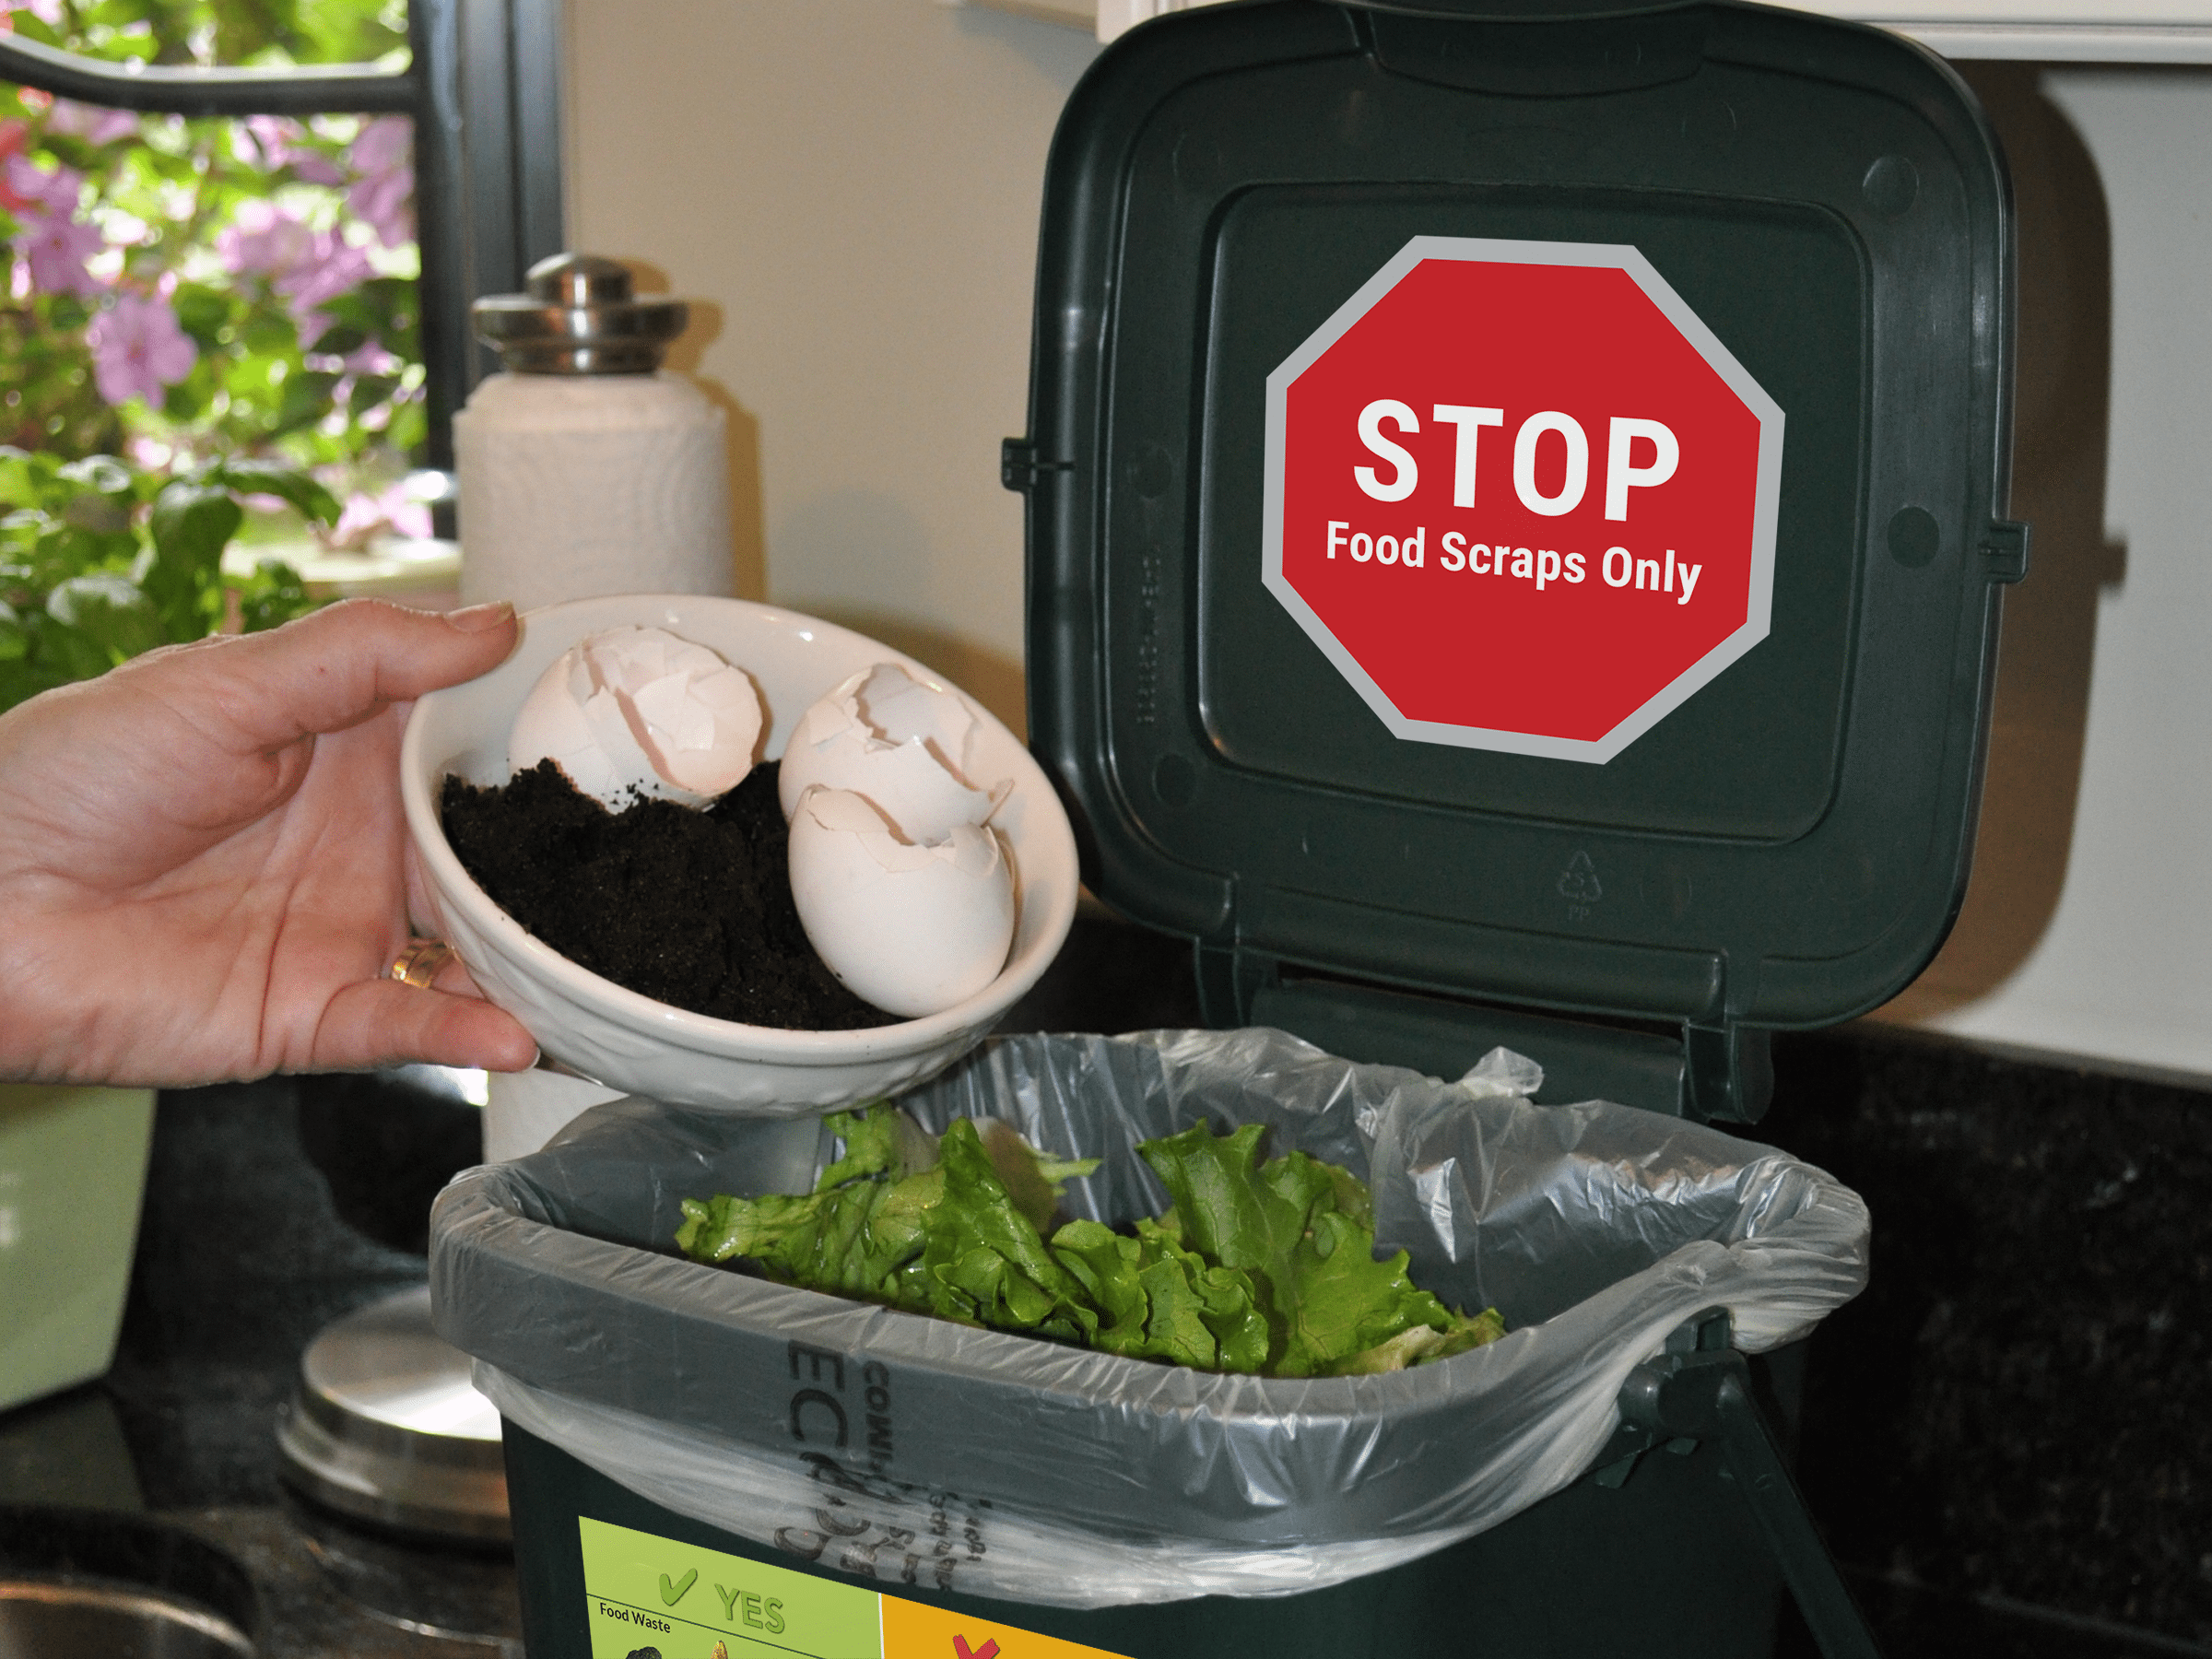 Ecosafe Green | Zero waste - compost bin